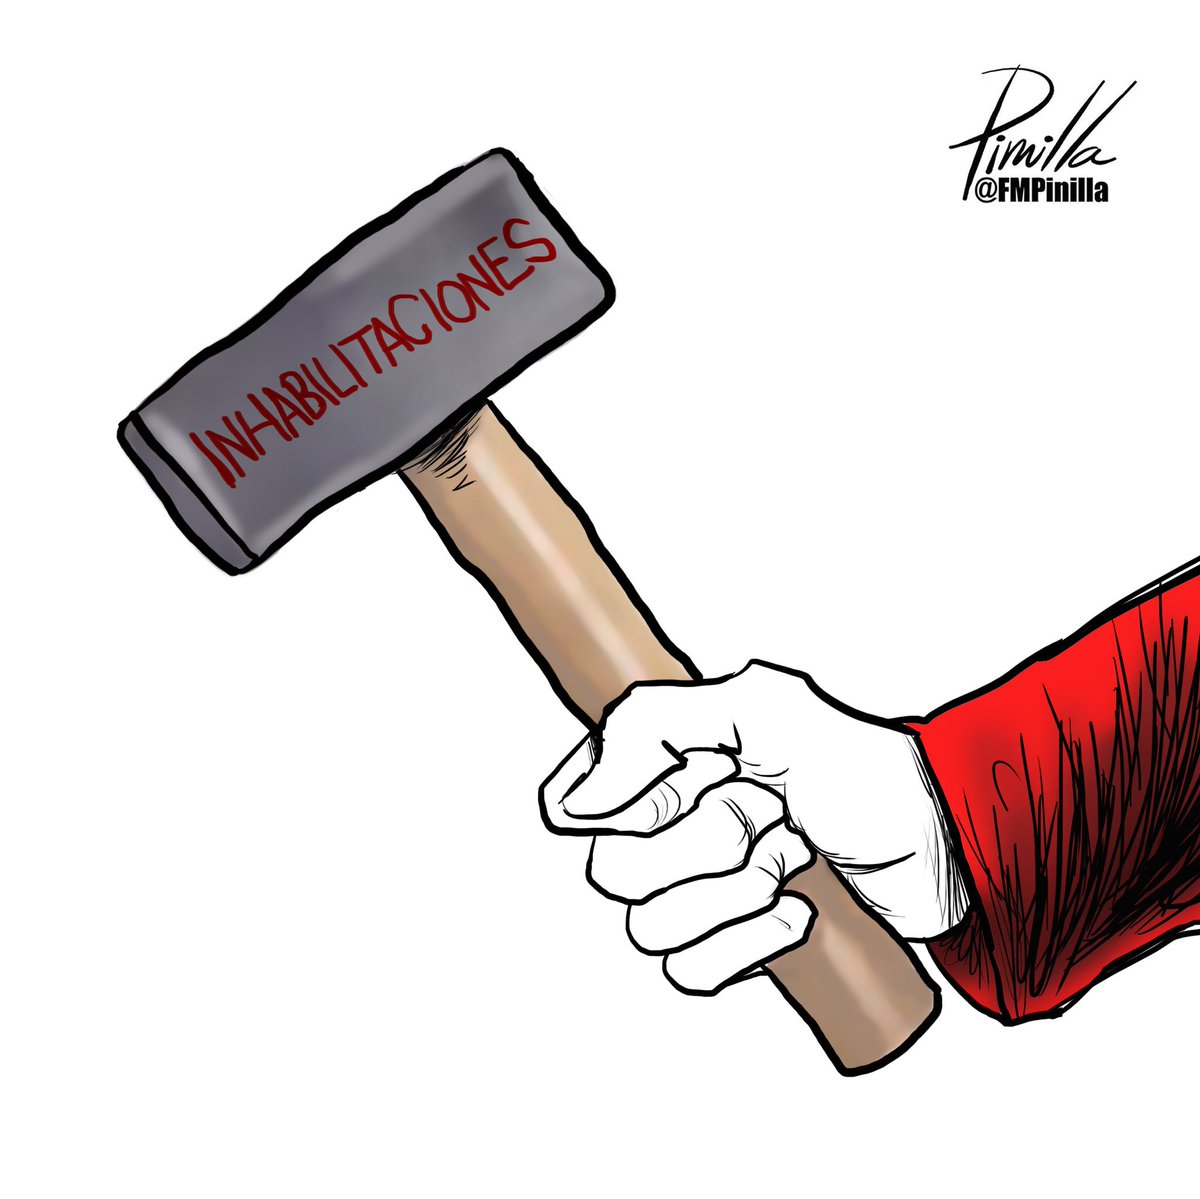 Inhabilitaciones...
•
#caricatura para @elnacionalweb 
•
#caricatura #cartoon #Venezuela #venezolanos #politicalcartoon